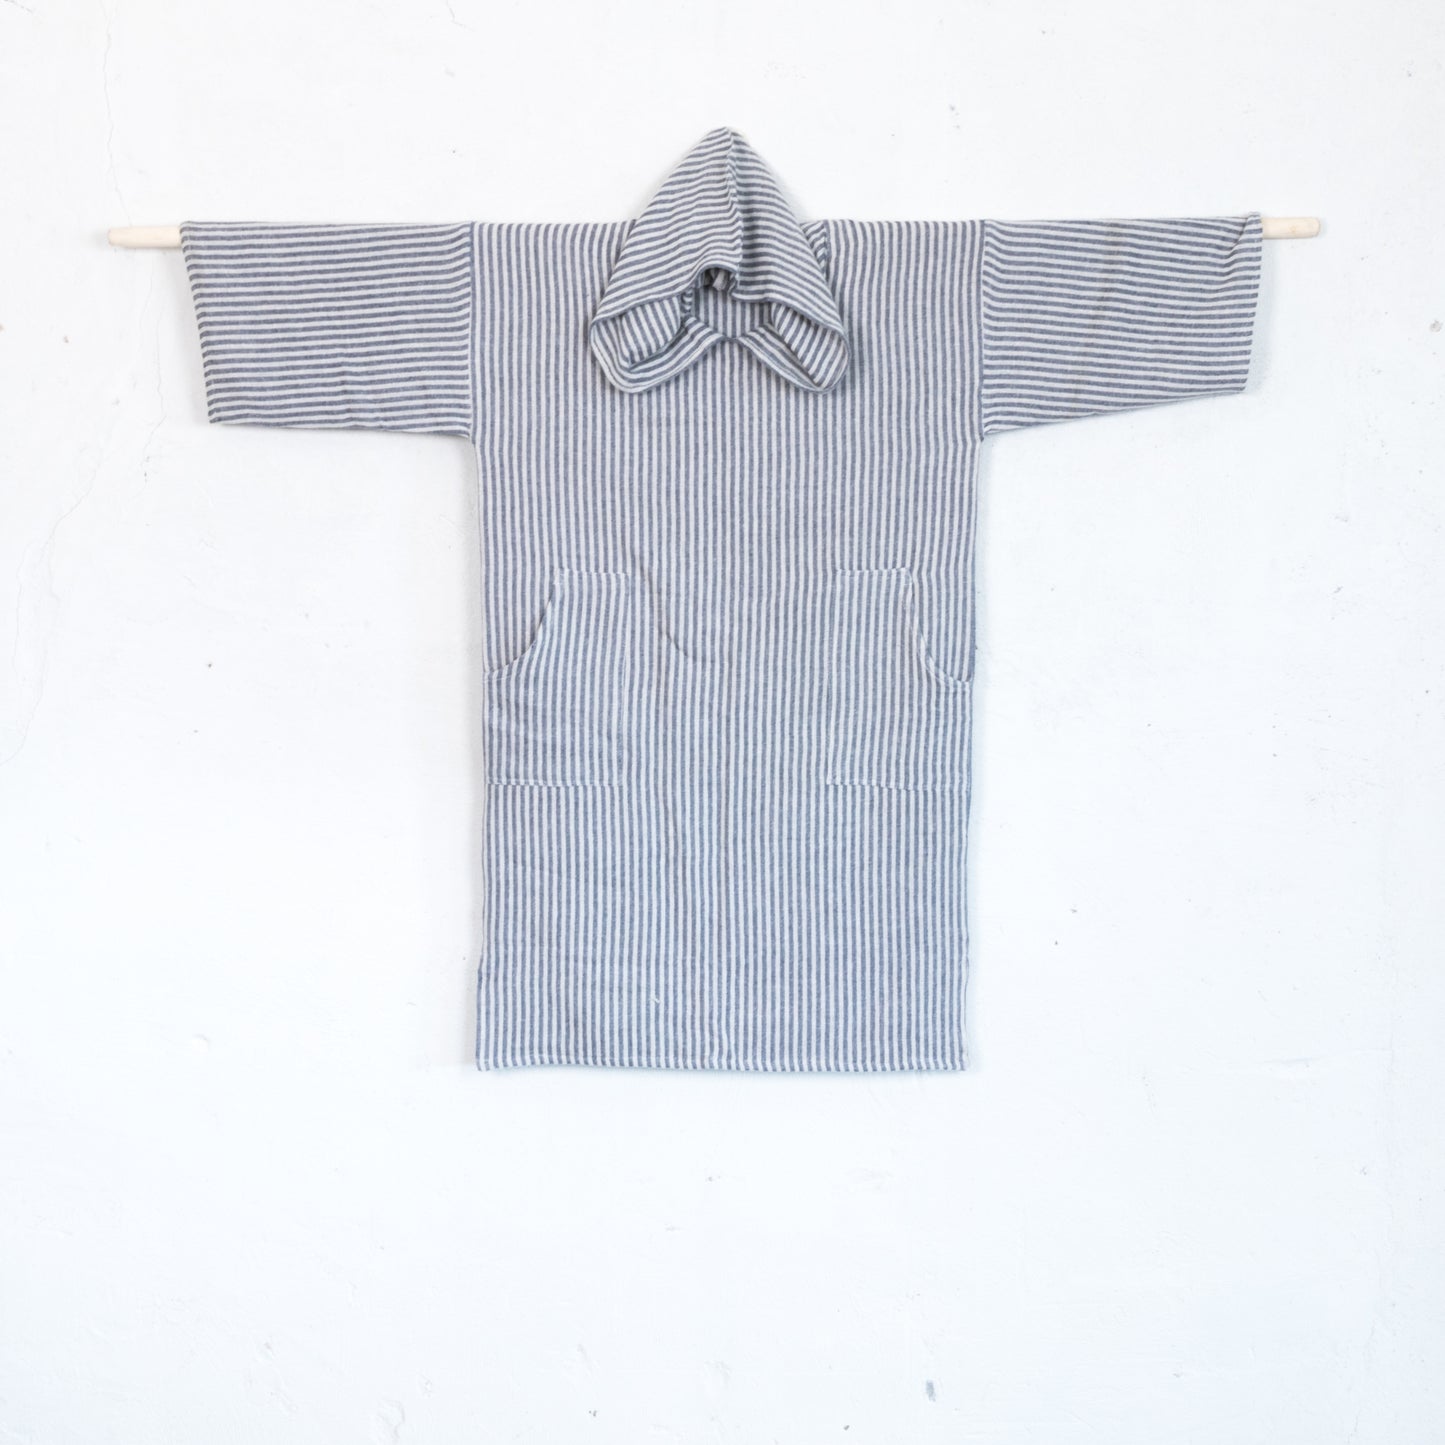 Ruukki sauna/living suit with sleeves - vertical stripe